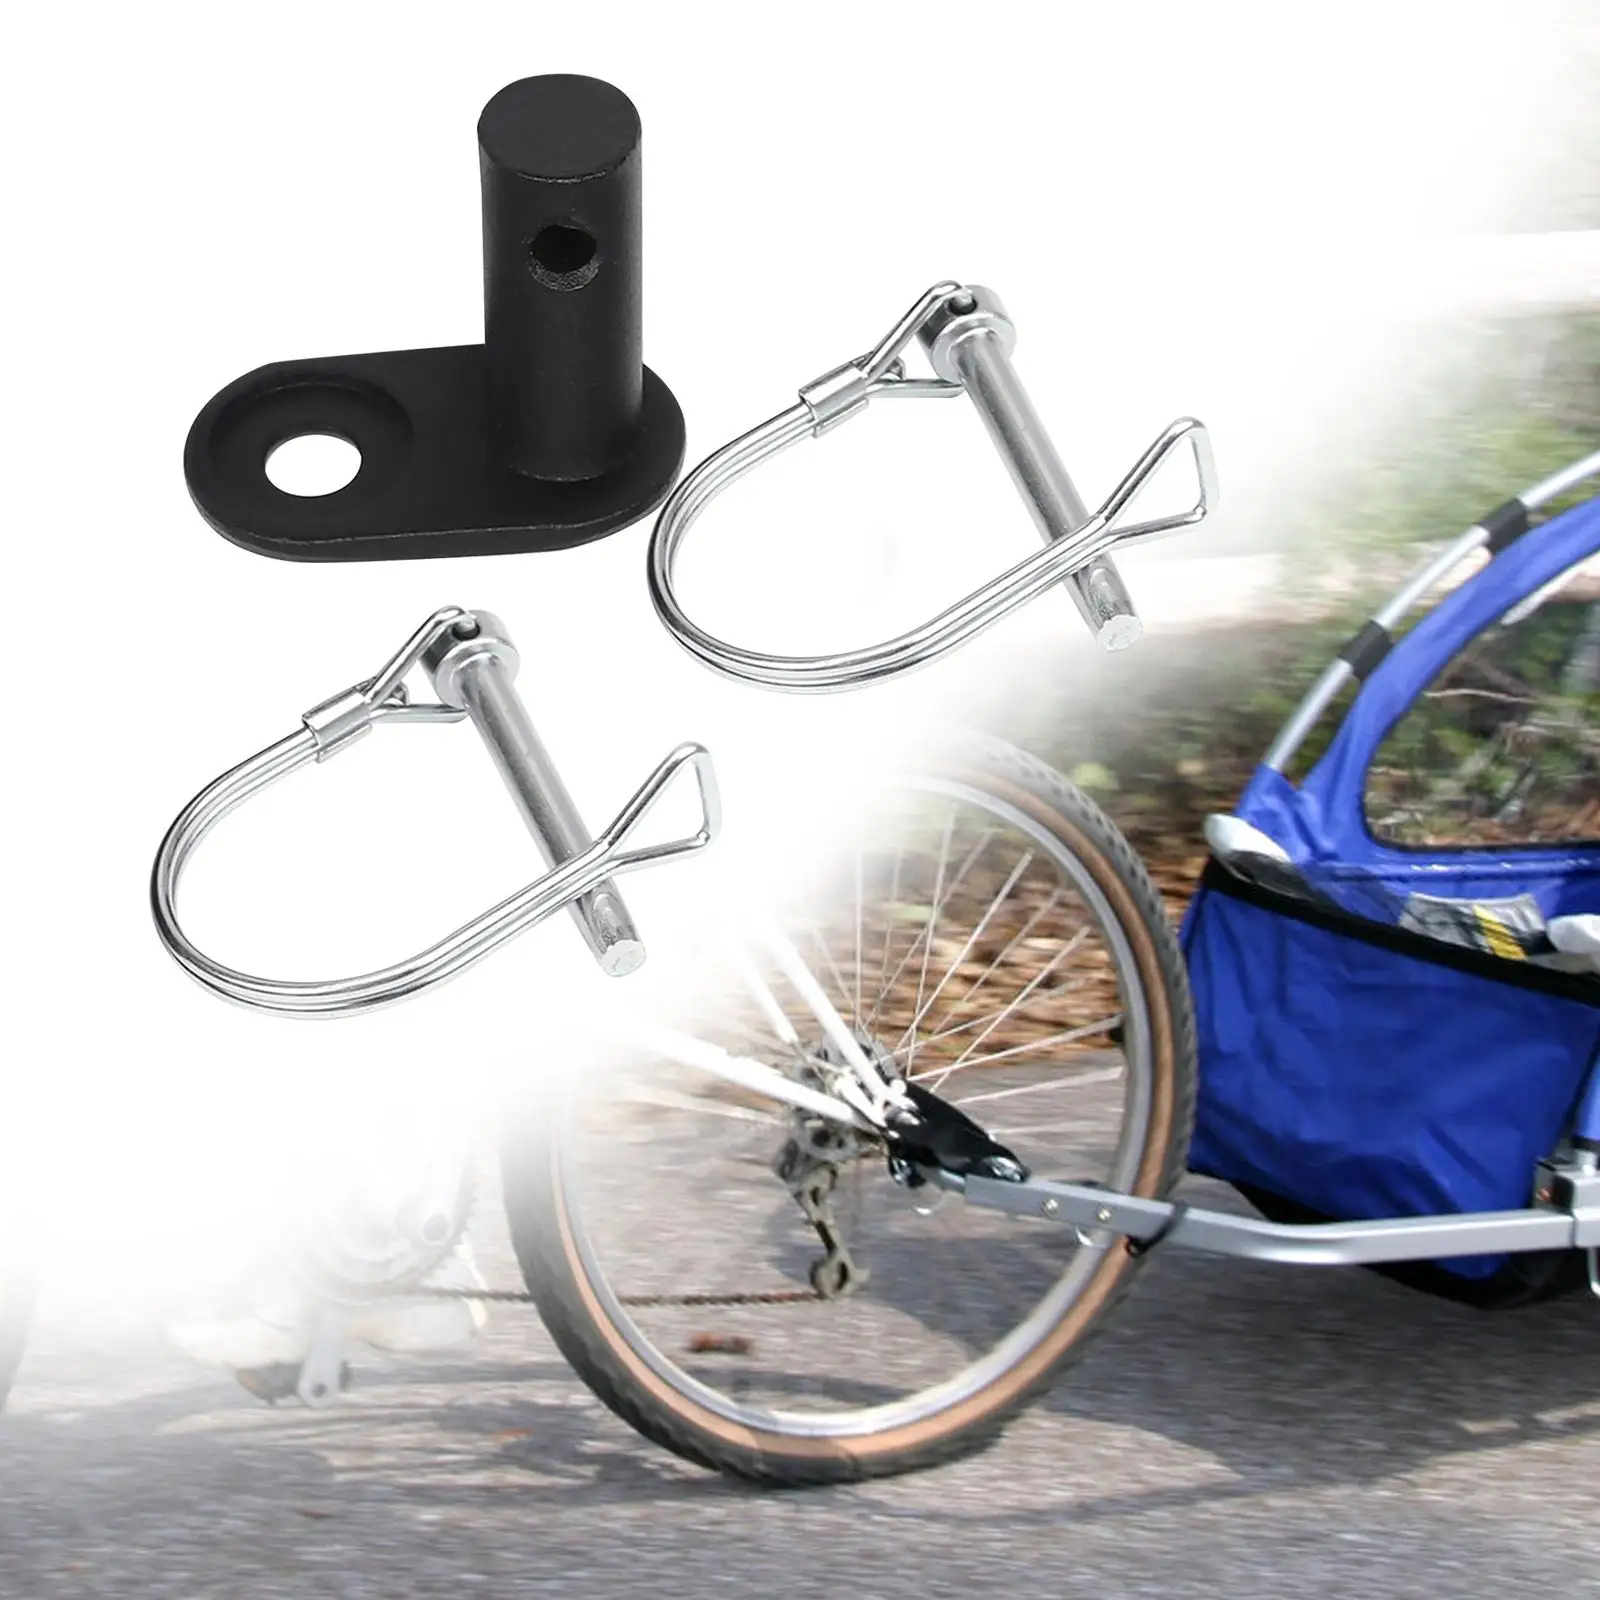 Bike Trailer Hitch Bike Trailer Attachment Replacement Cycling Accessories